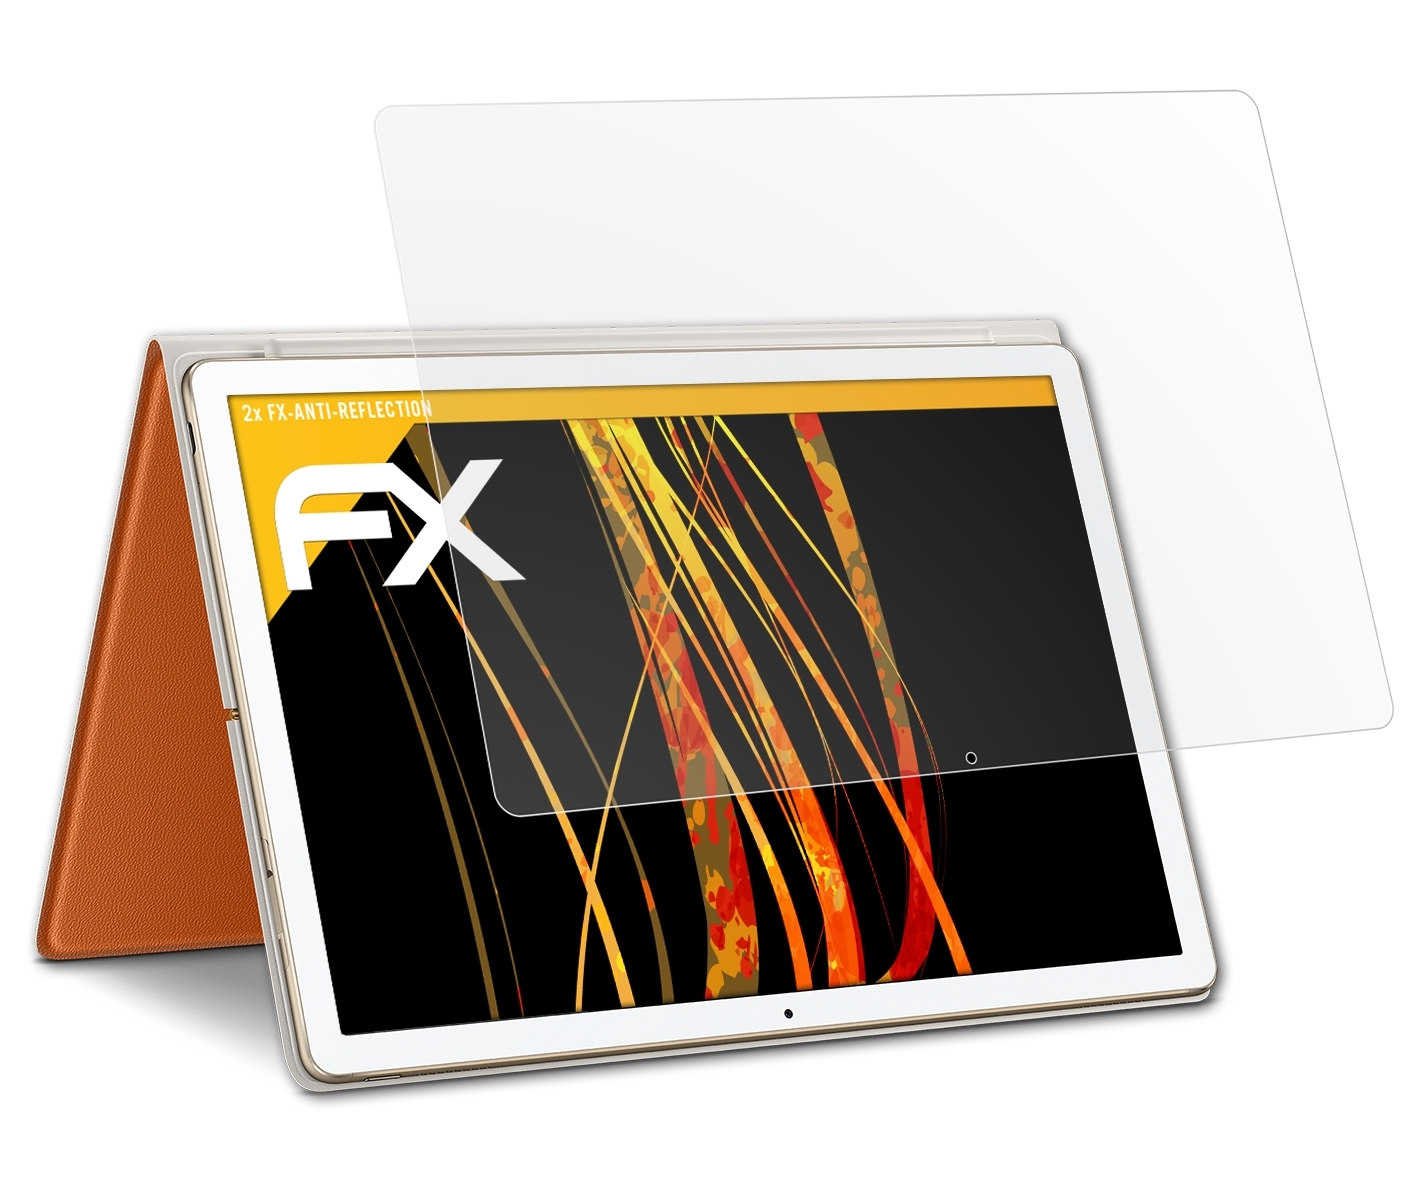 ATFOLIX 2x FX-Antireflex Displayschutz(für MateBook Huawei E)